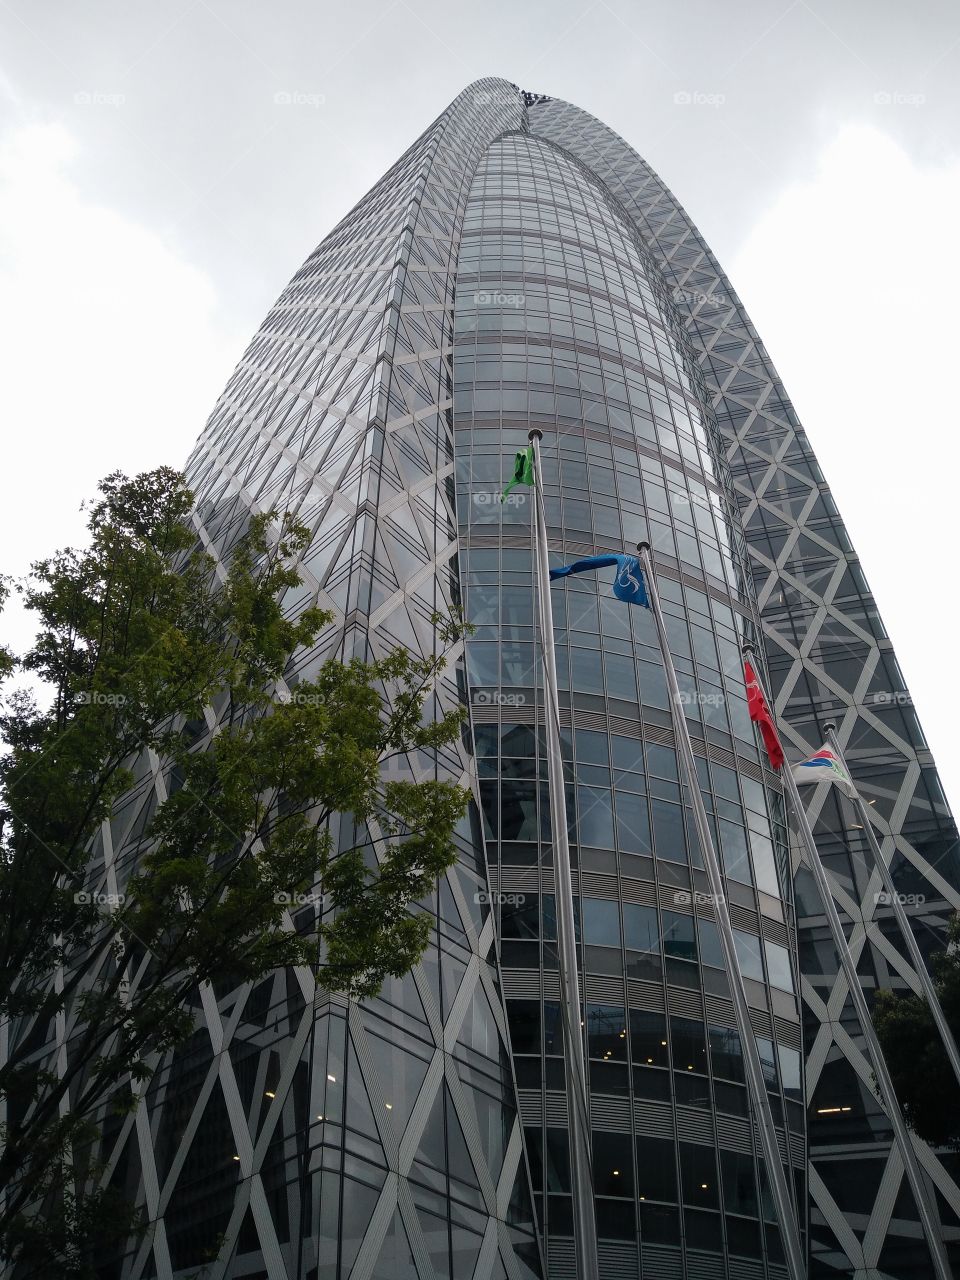 Tall skyscraper in Japan